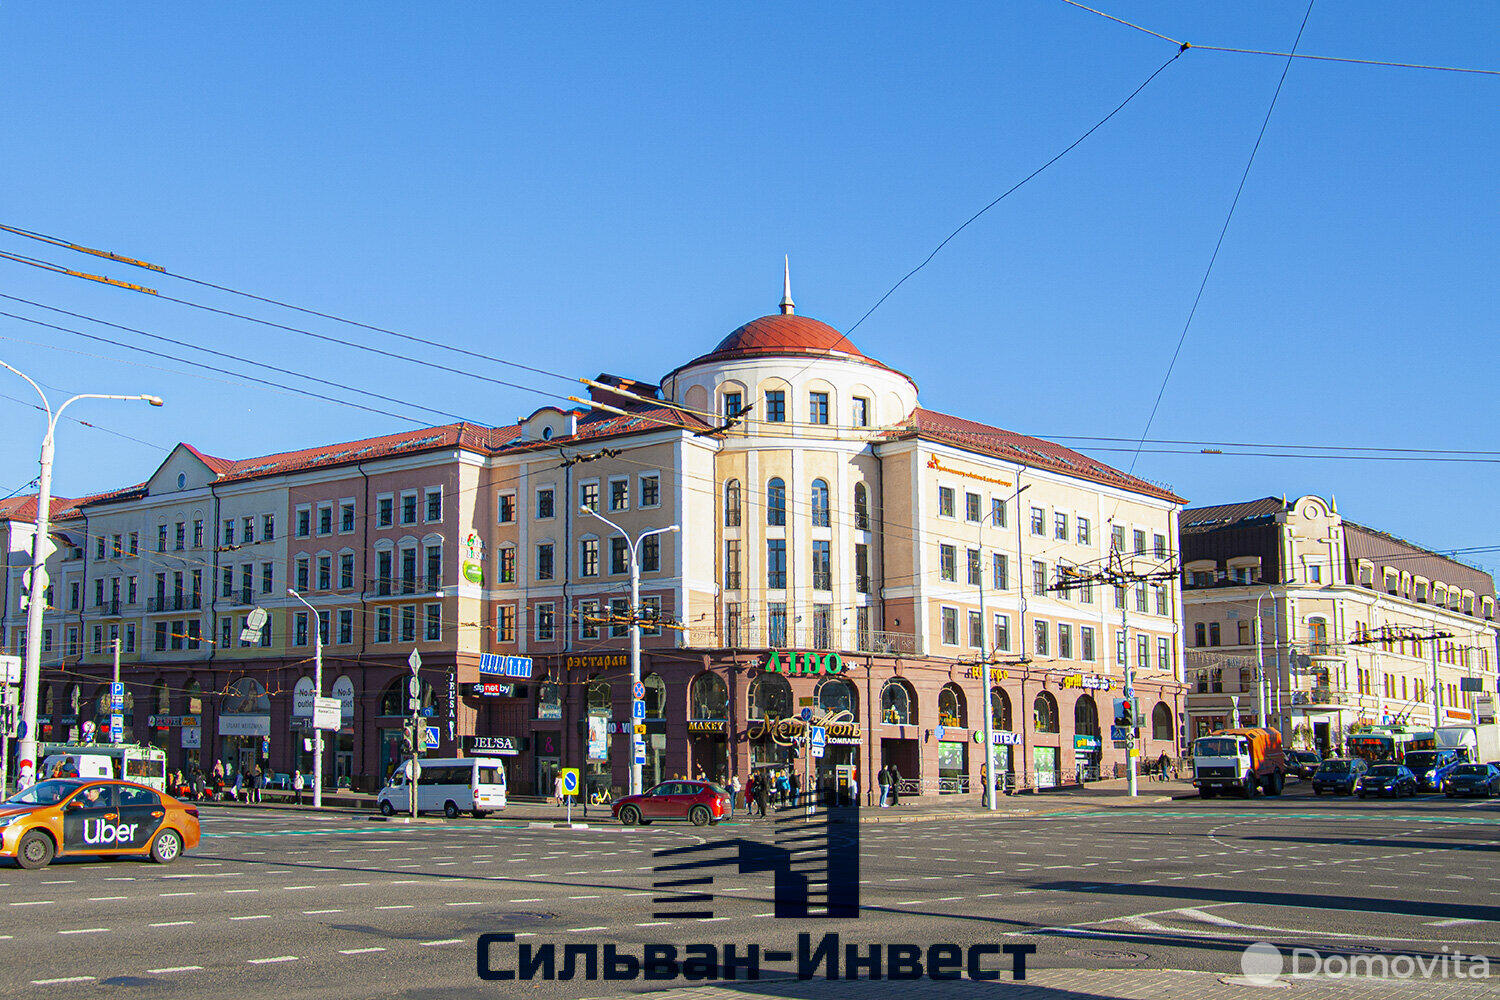 Аренда торговой точки на ул. Немига, д. 5 в Минске, 11325EUR - фото 2